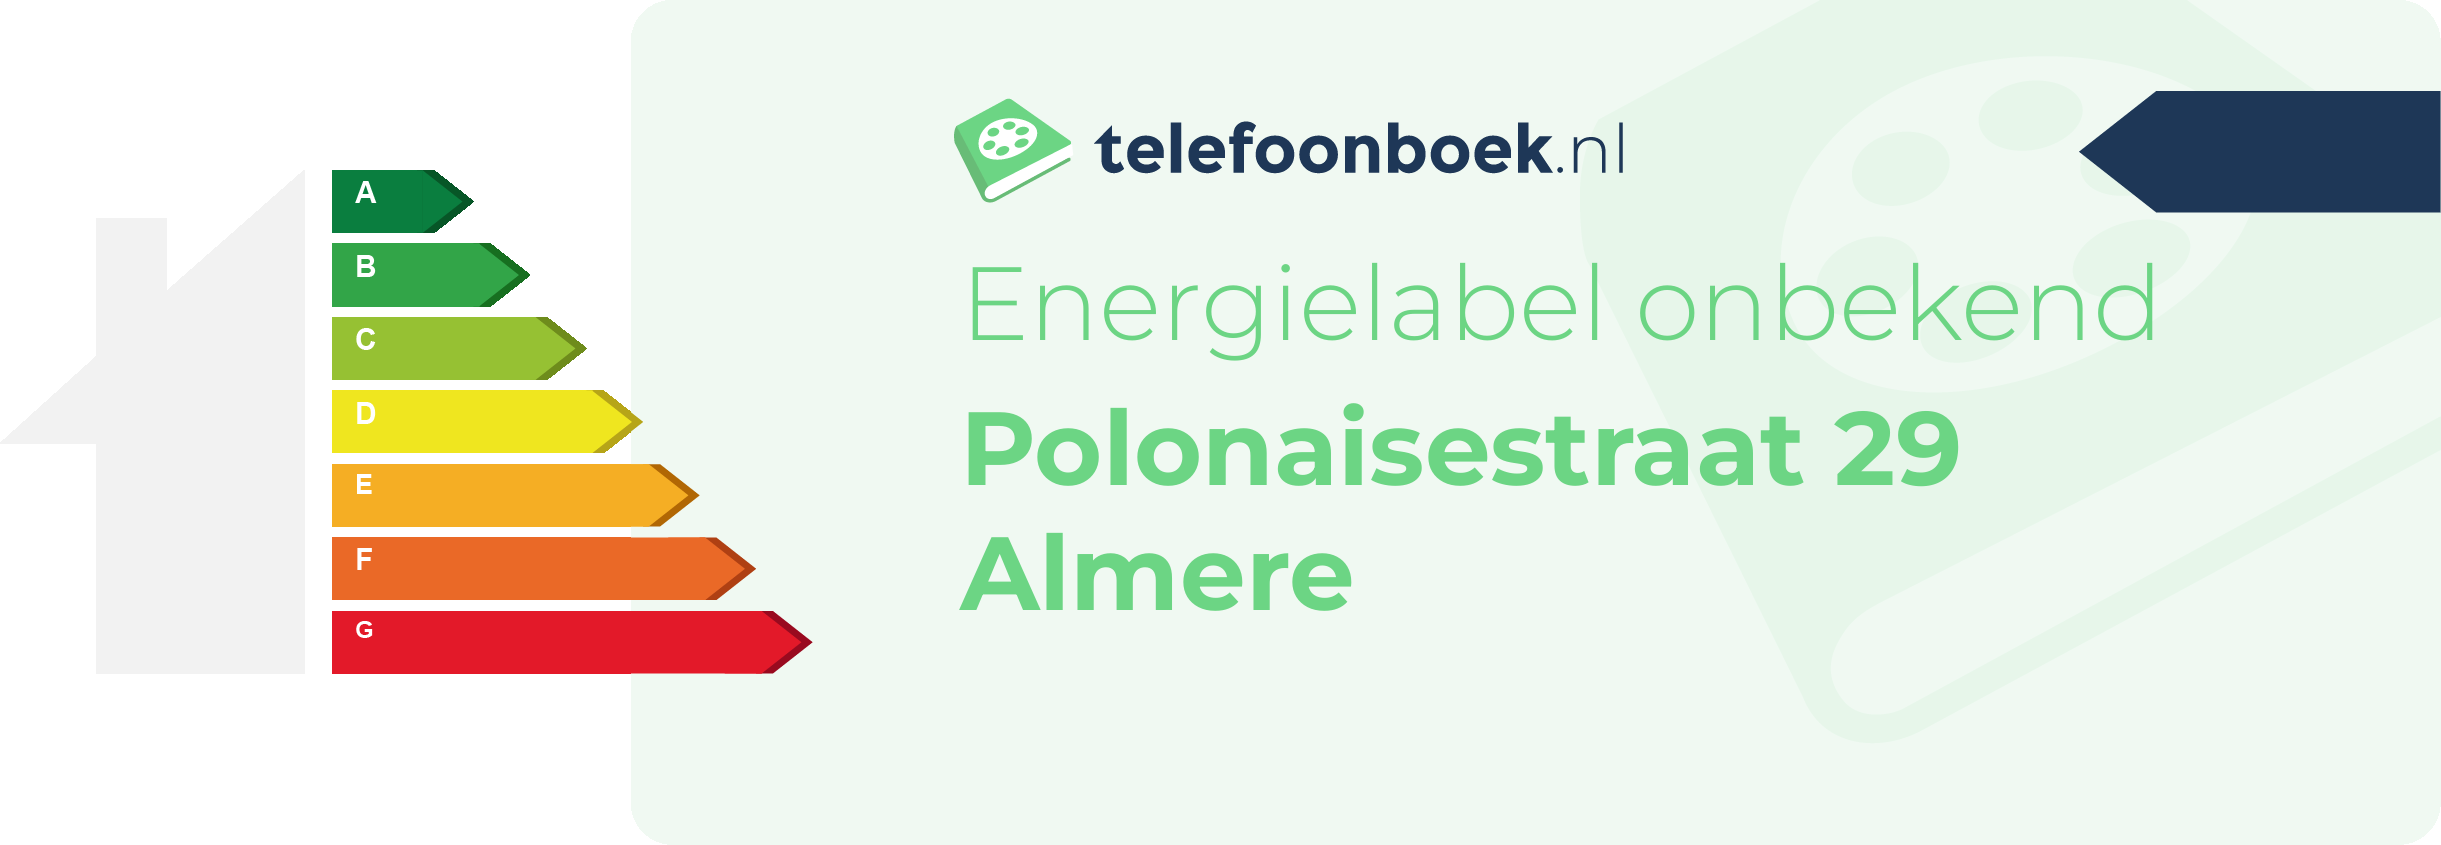 Energielabel Polonaisestraat 29 Almere